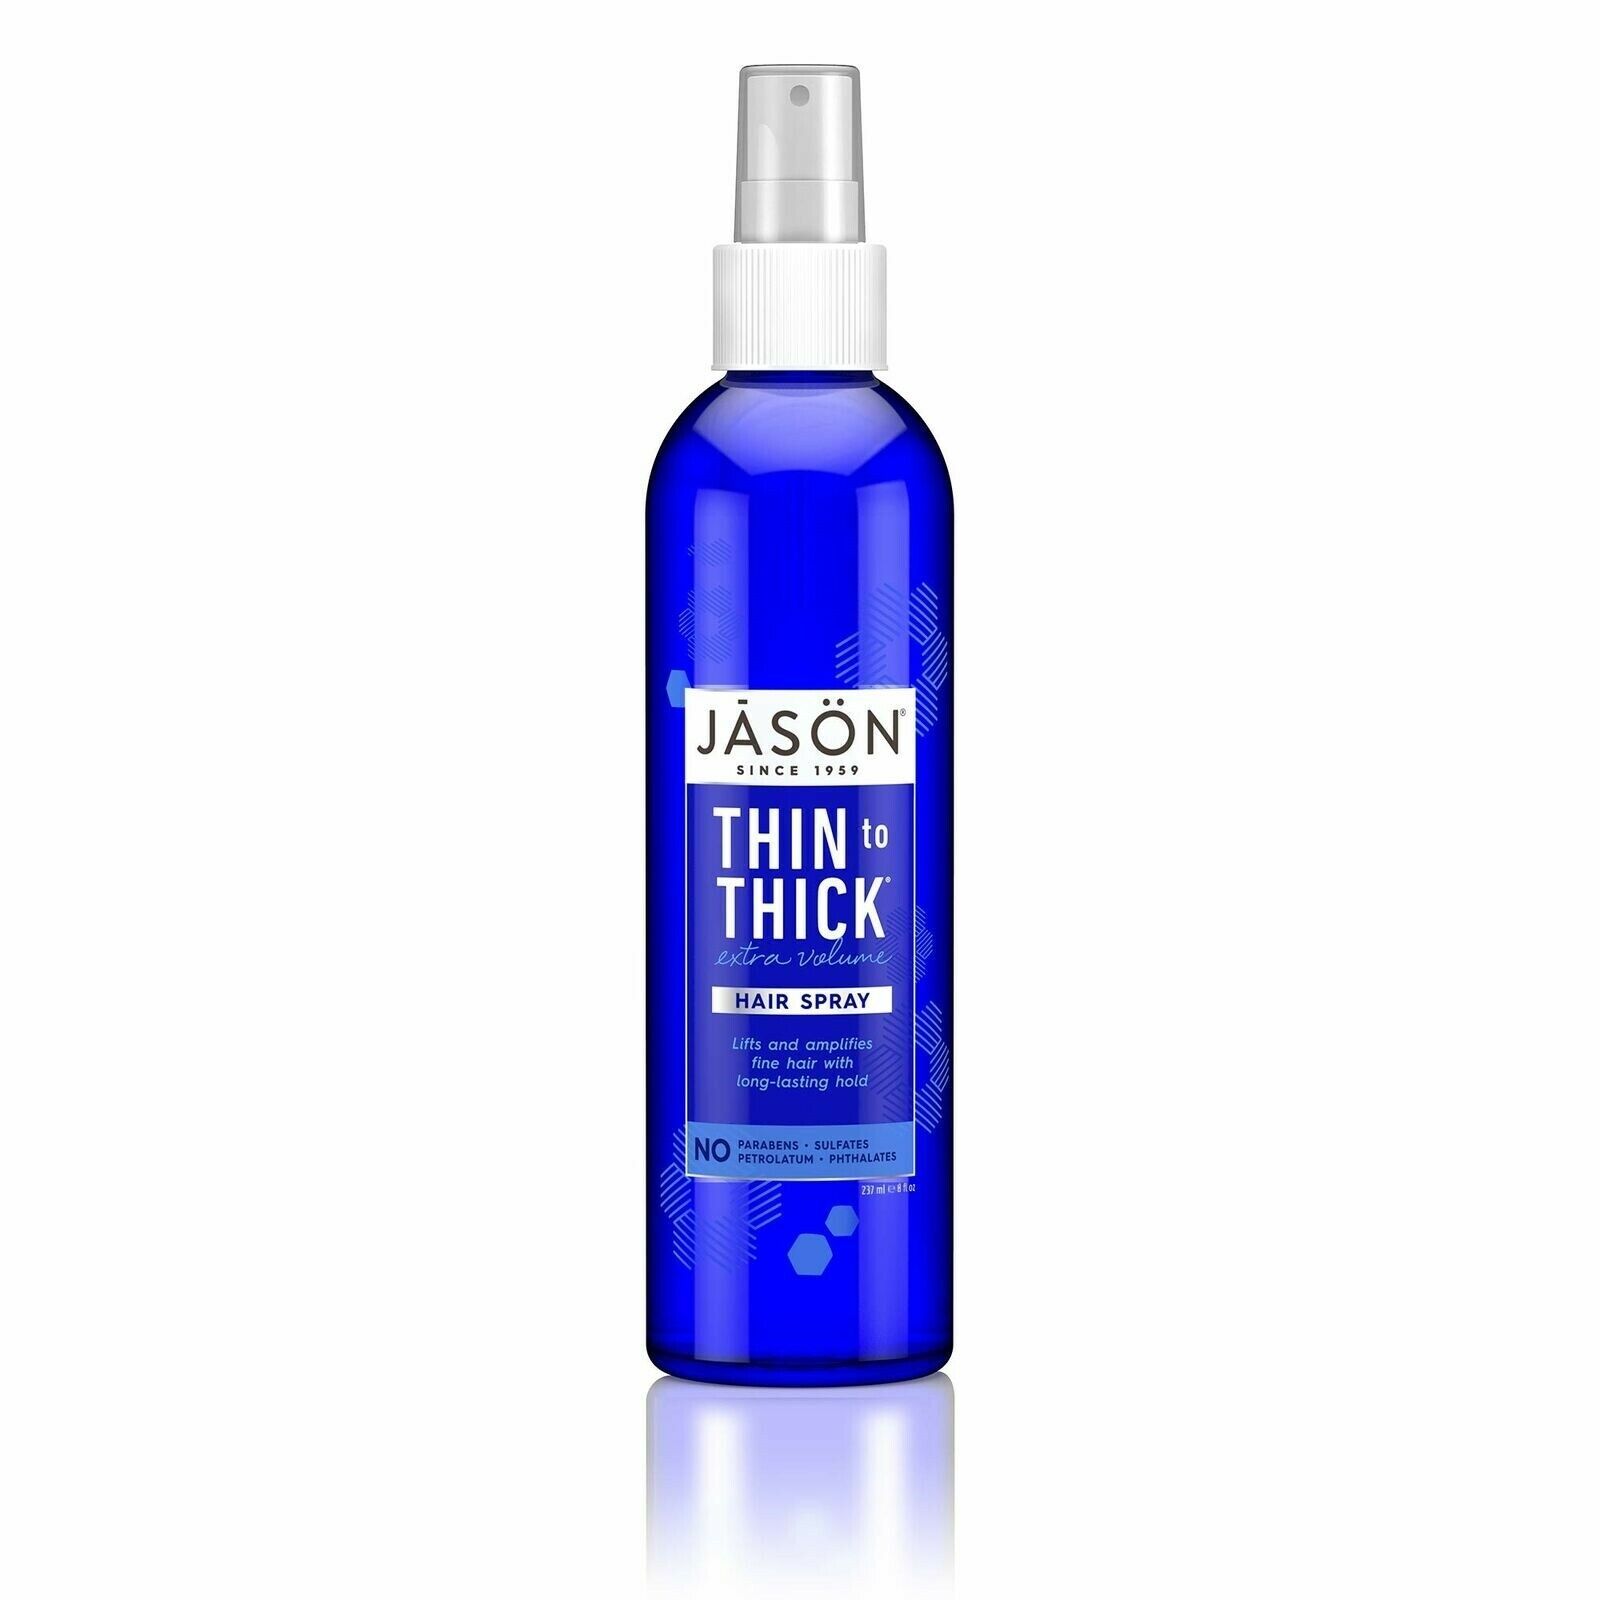 JASON Thin-to-Thick Extra Volume Hair Spray, 8 Ounce Bottle - $16.63